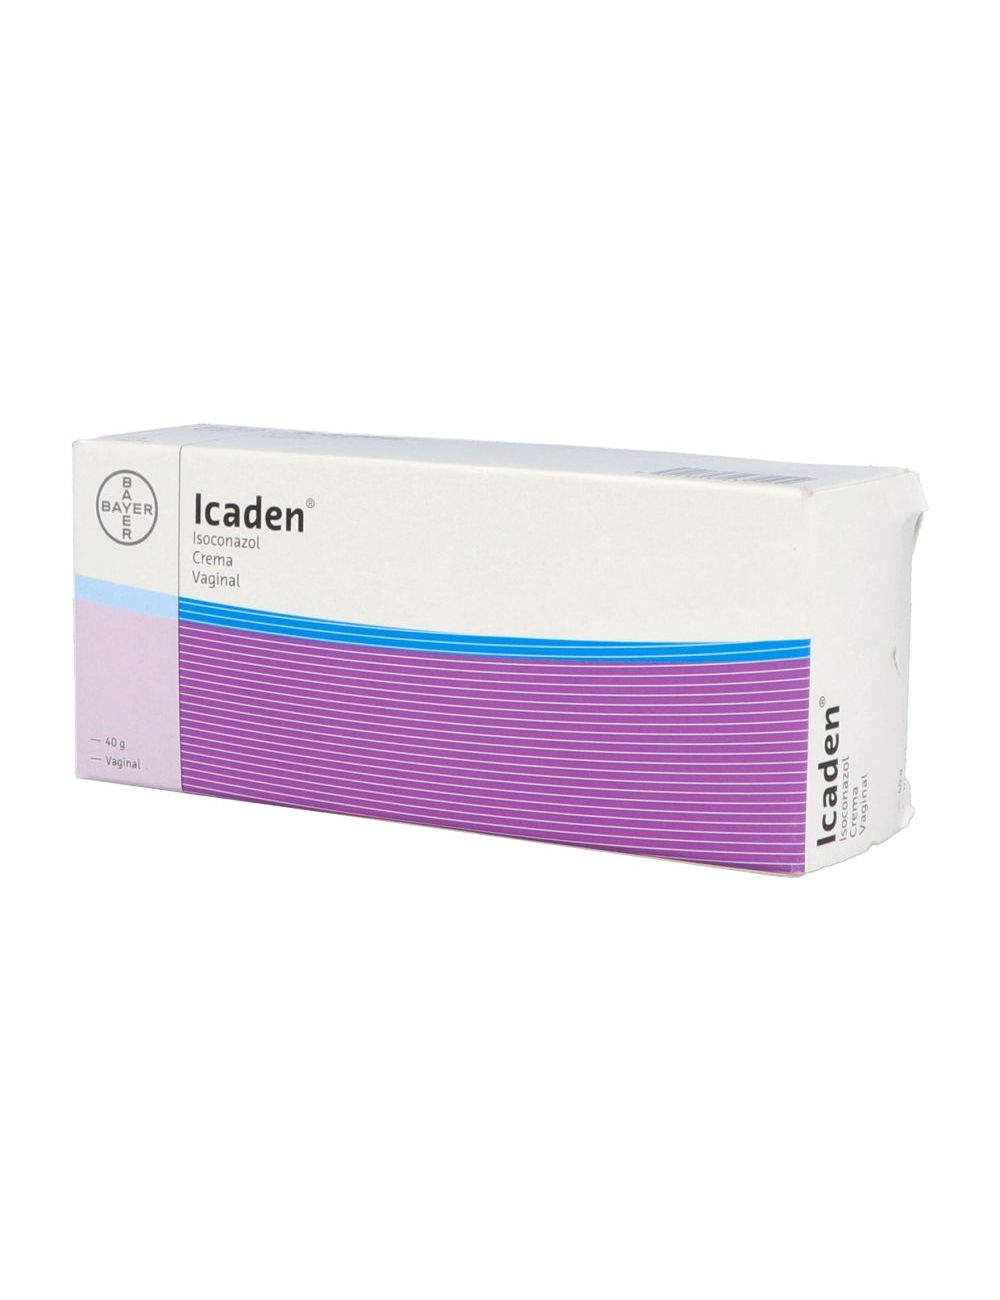 Icaden Crema Vaginal Caja Con Tubo Con 40 g